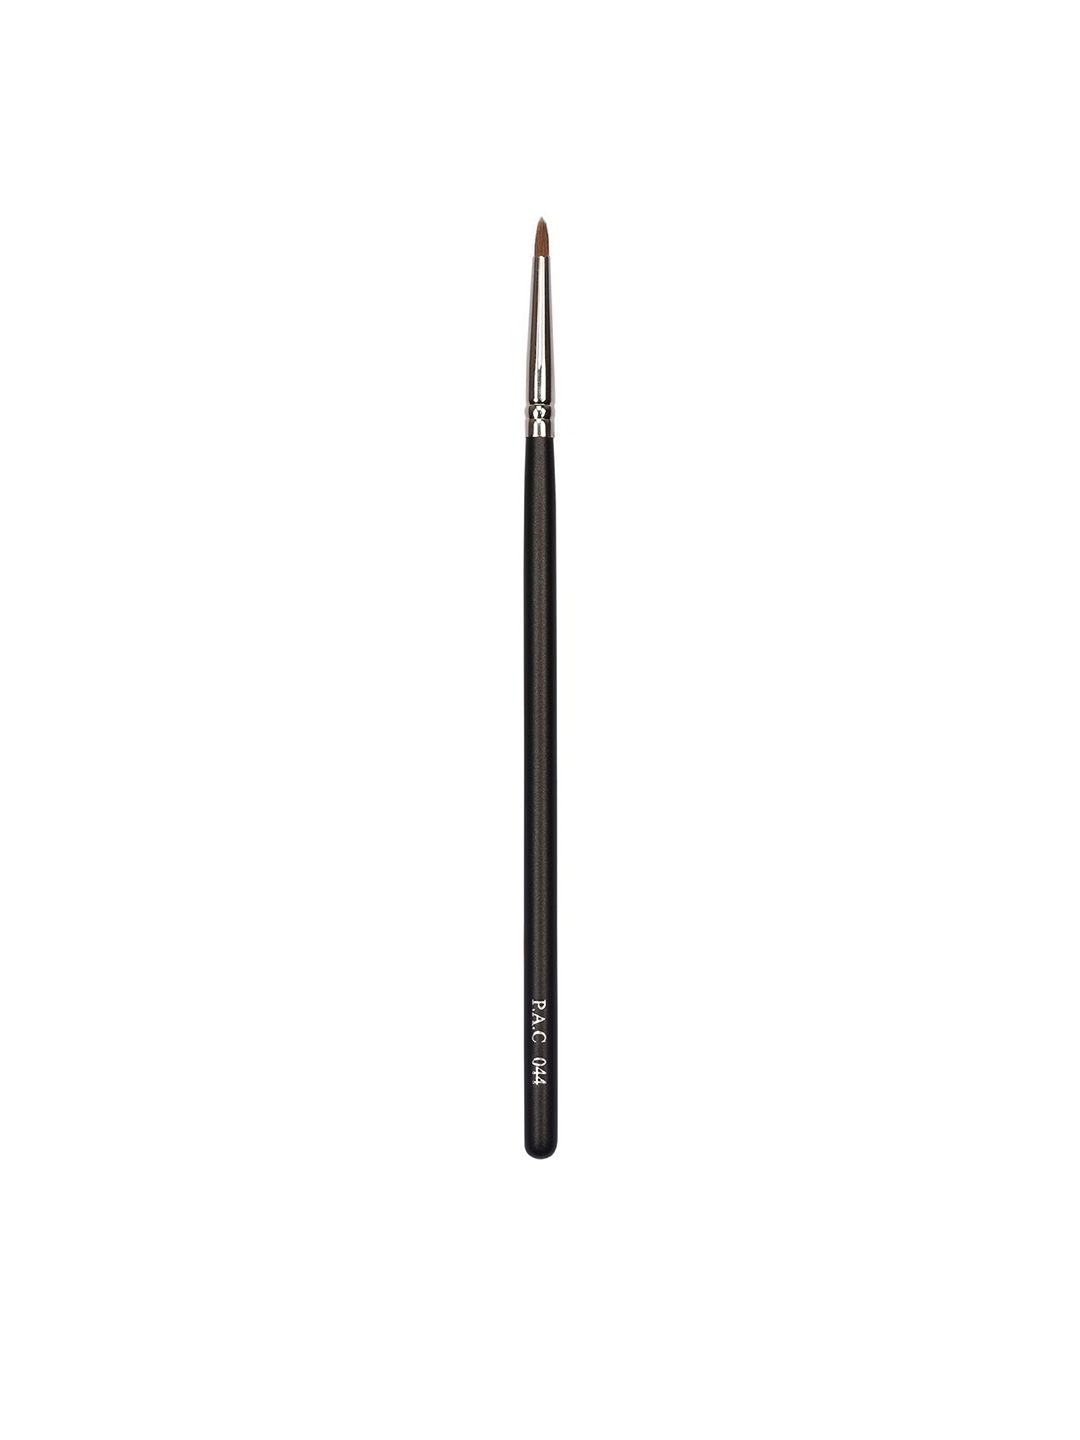 PAC Black Eyeliner Brush - 044 Price in India